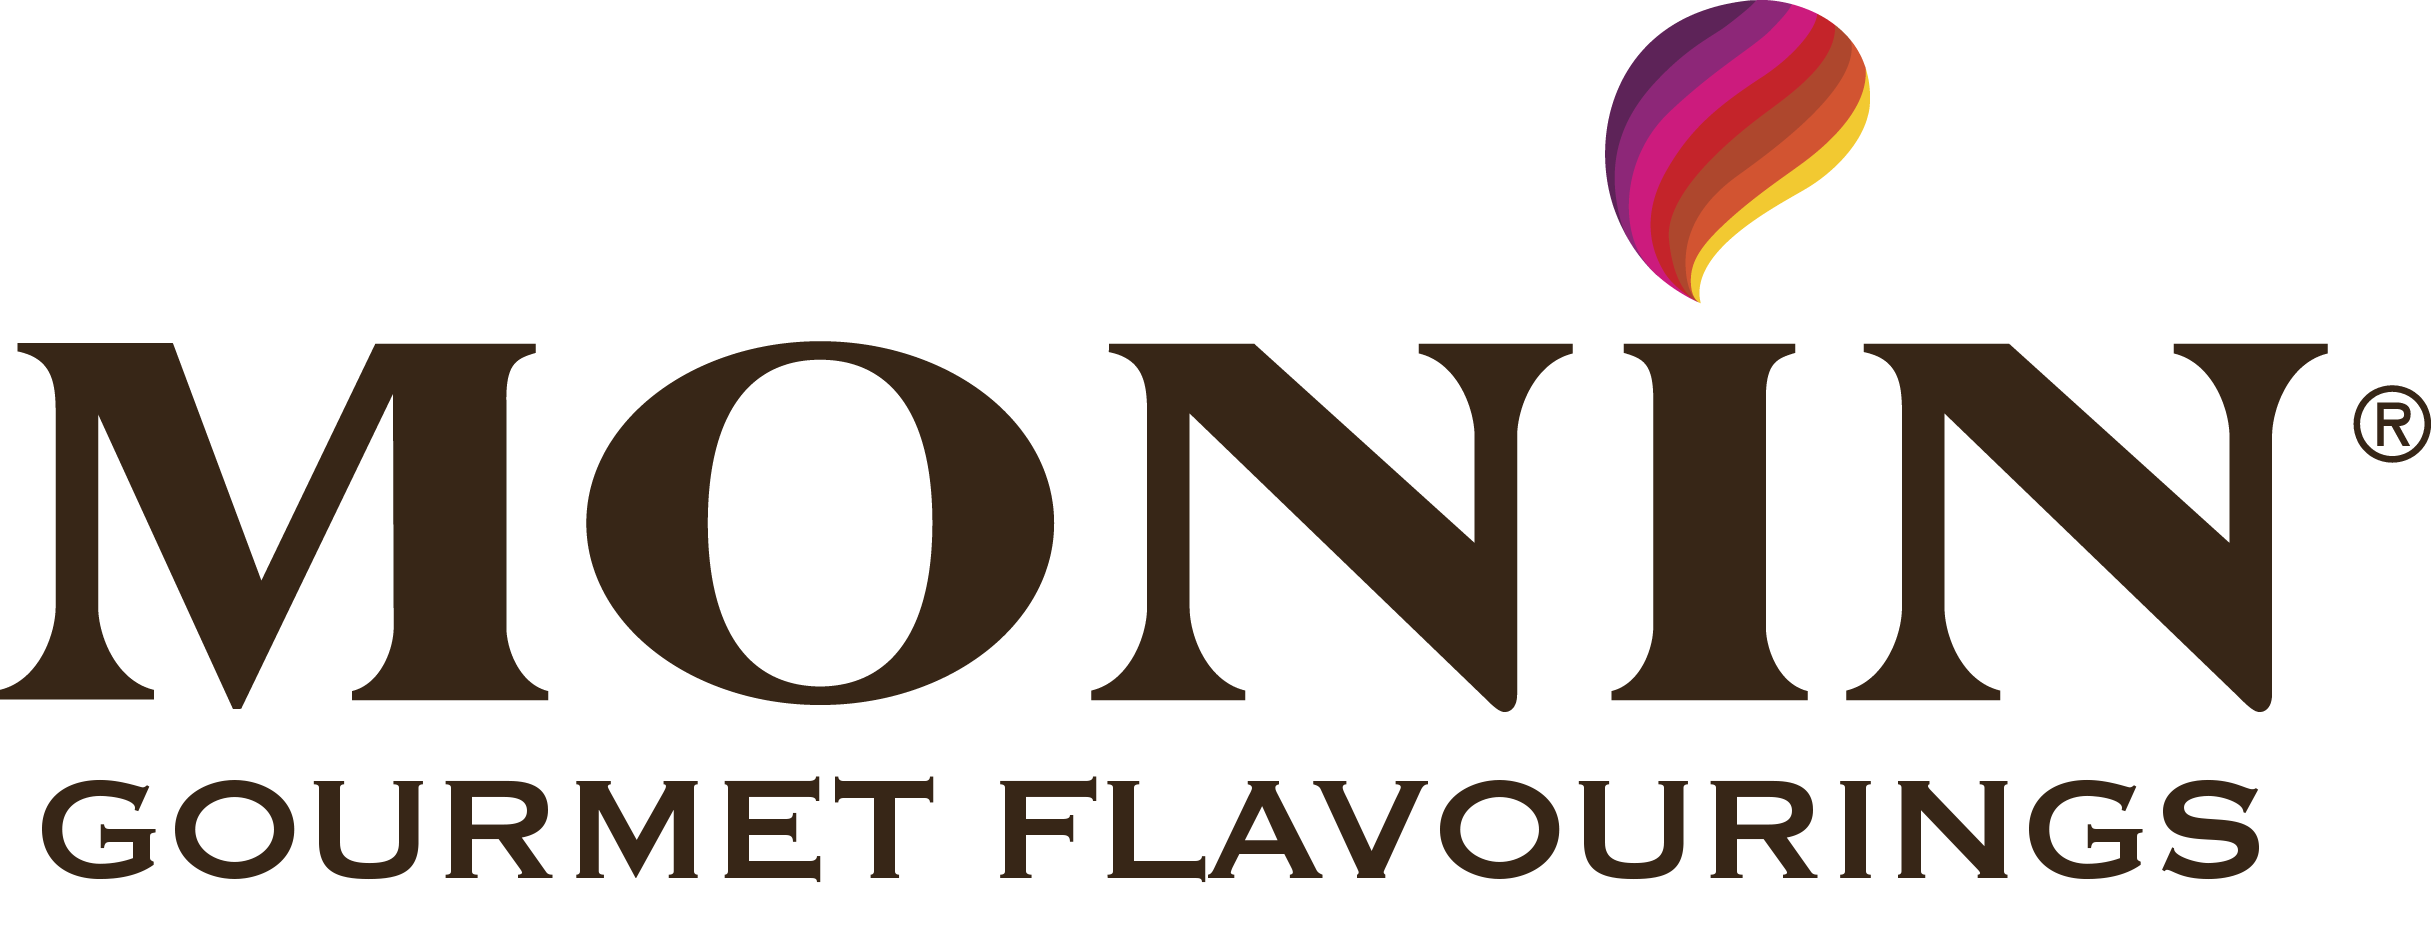 Gourmet logo-panache-full-coloured-rgb.png